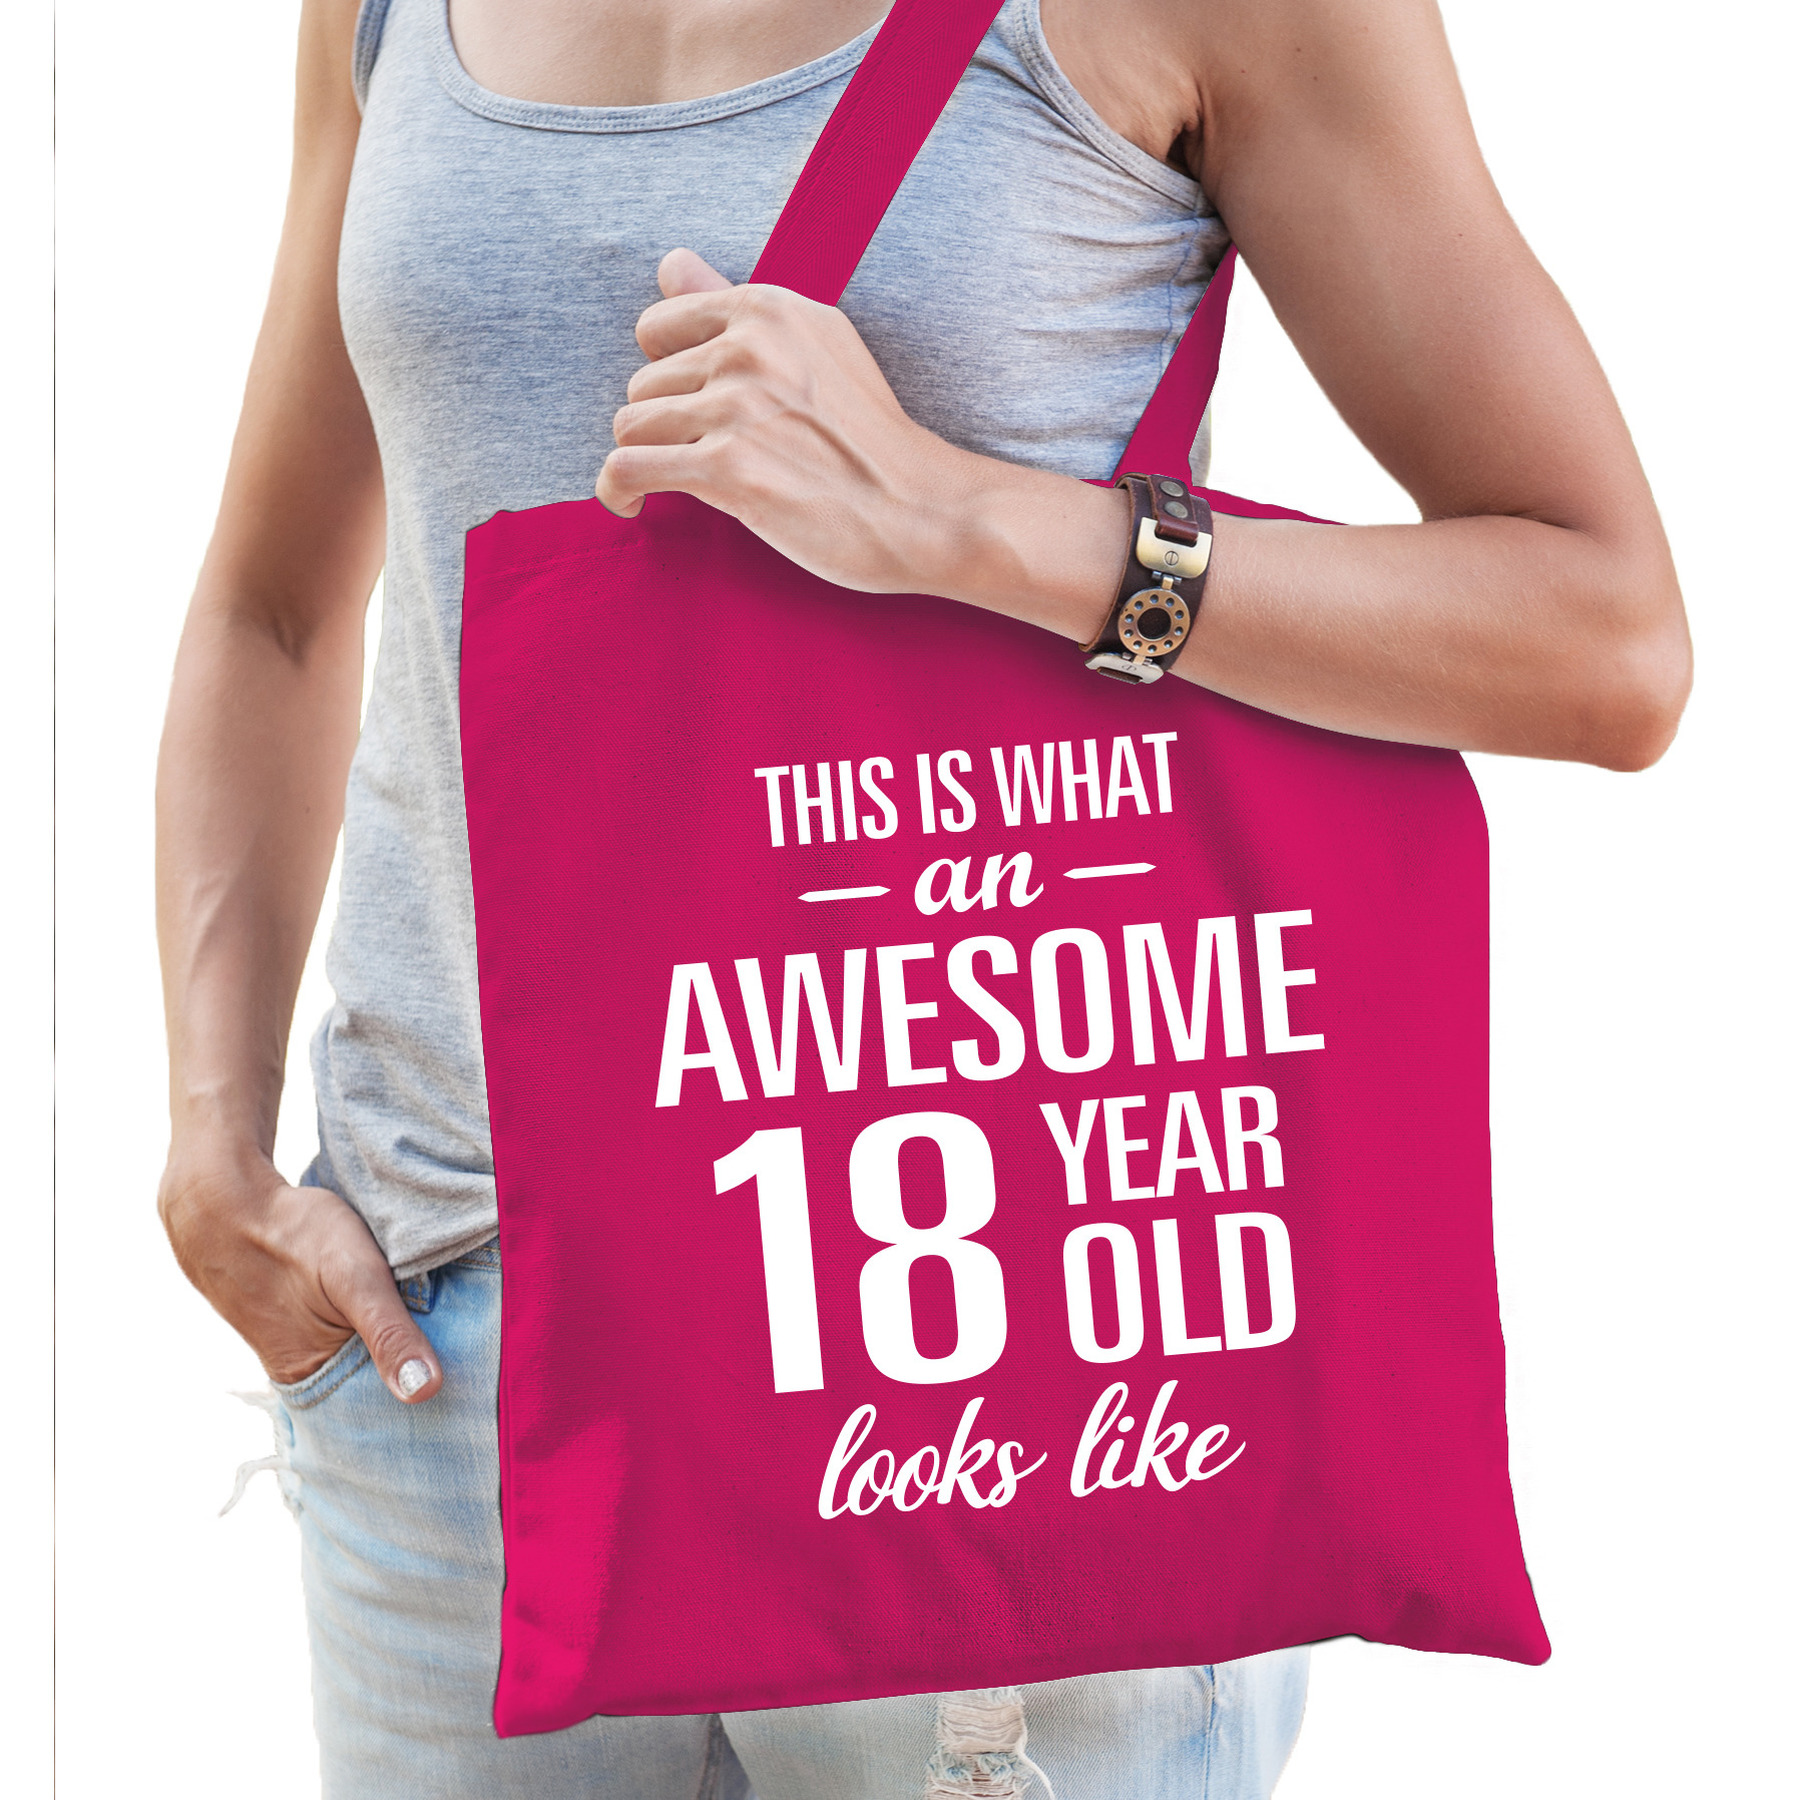 Awesome 18 year / geweldig 18 jaar cadeau tas roze voor dames